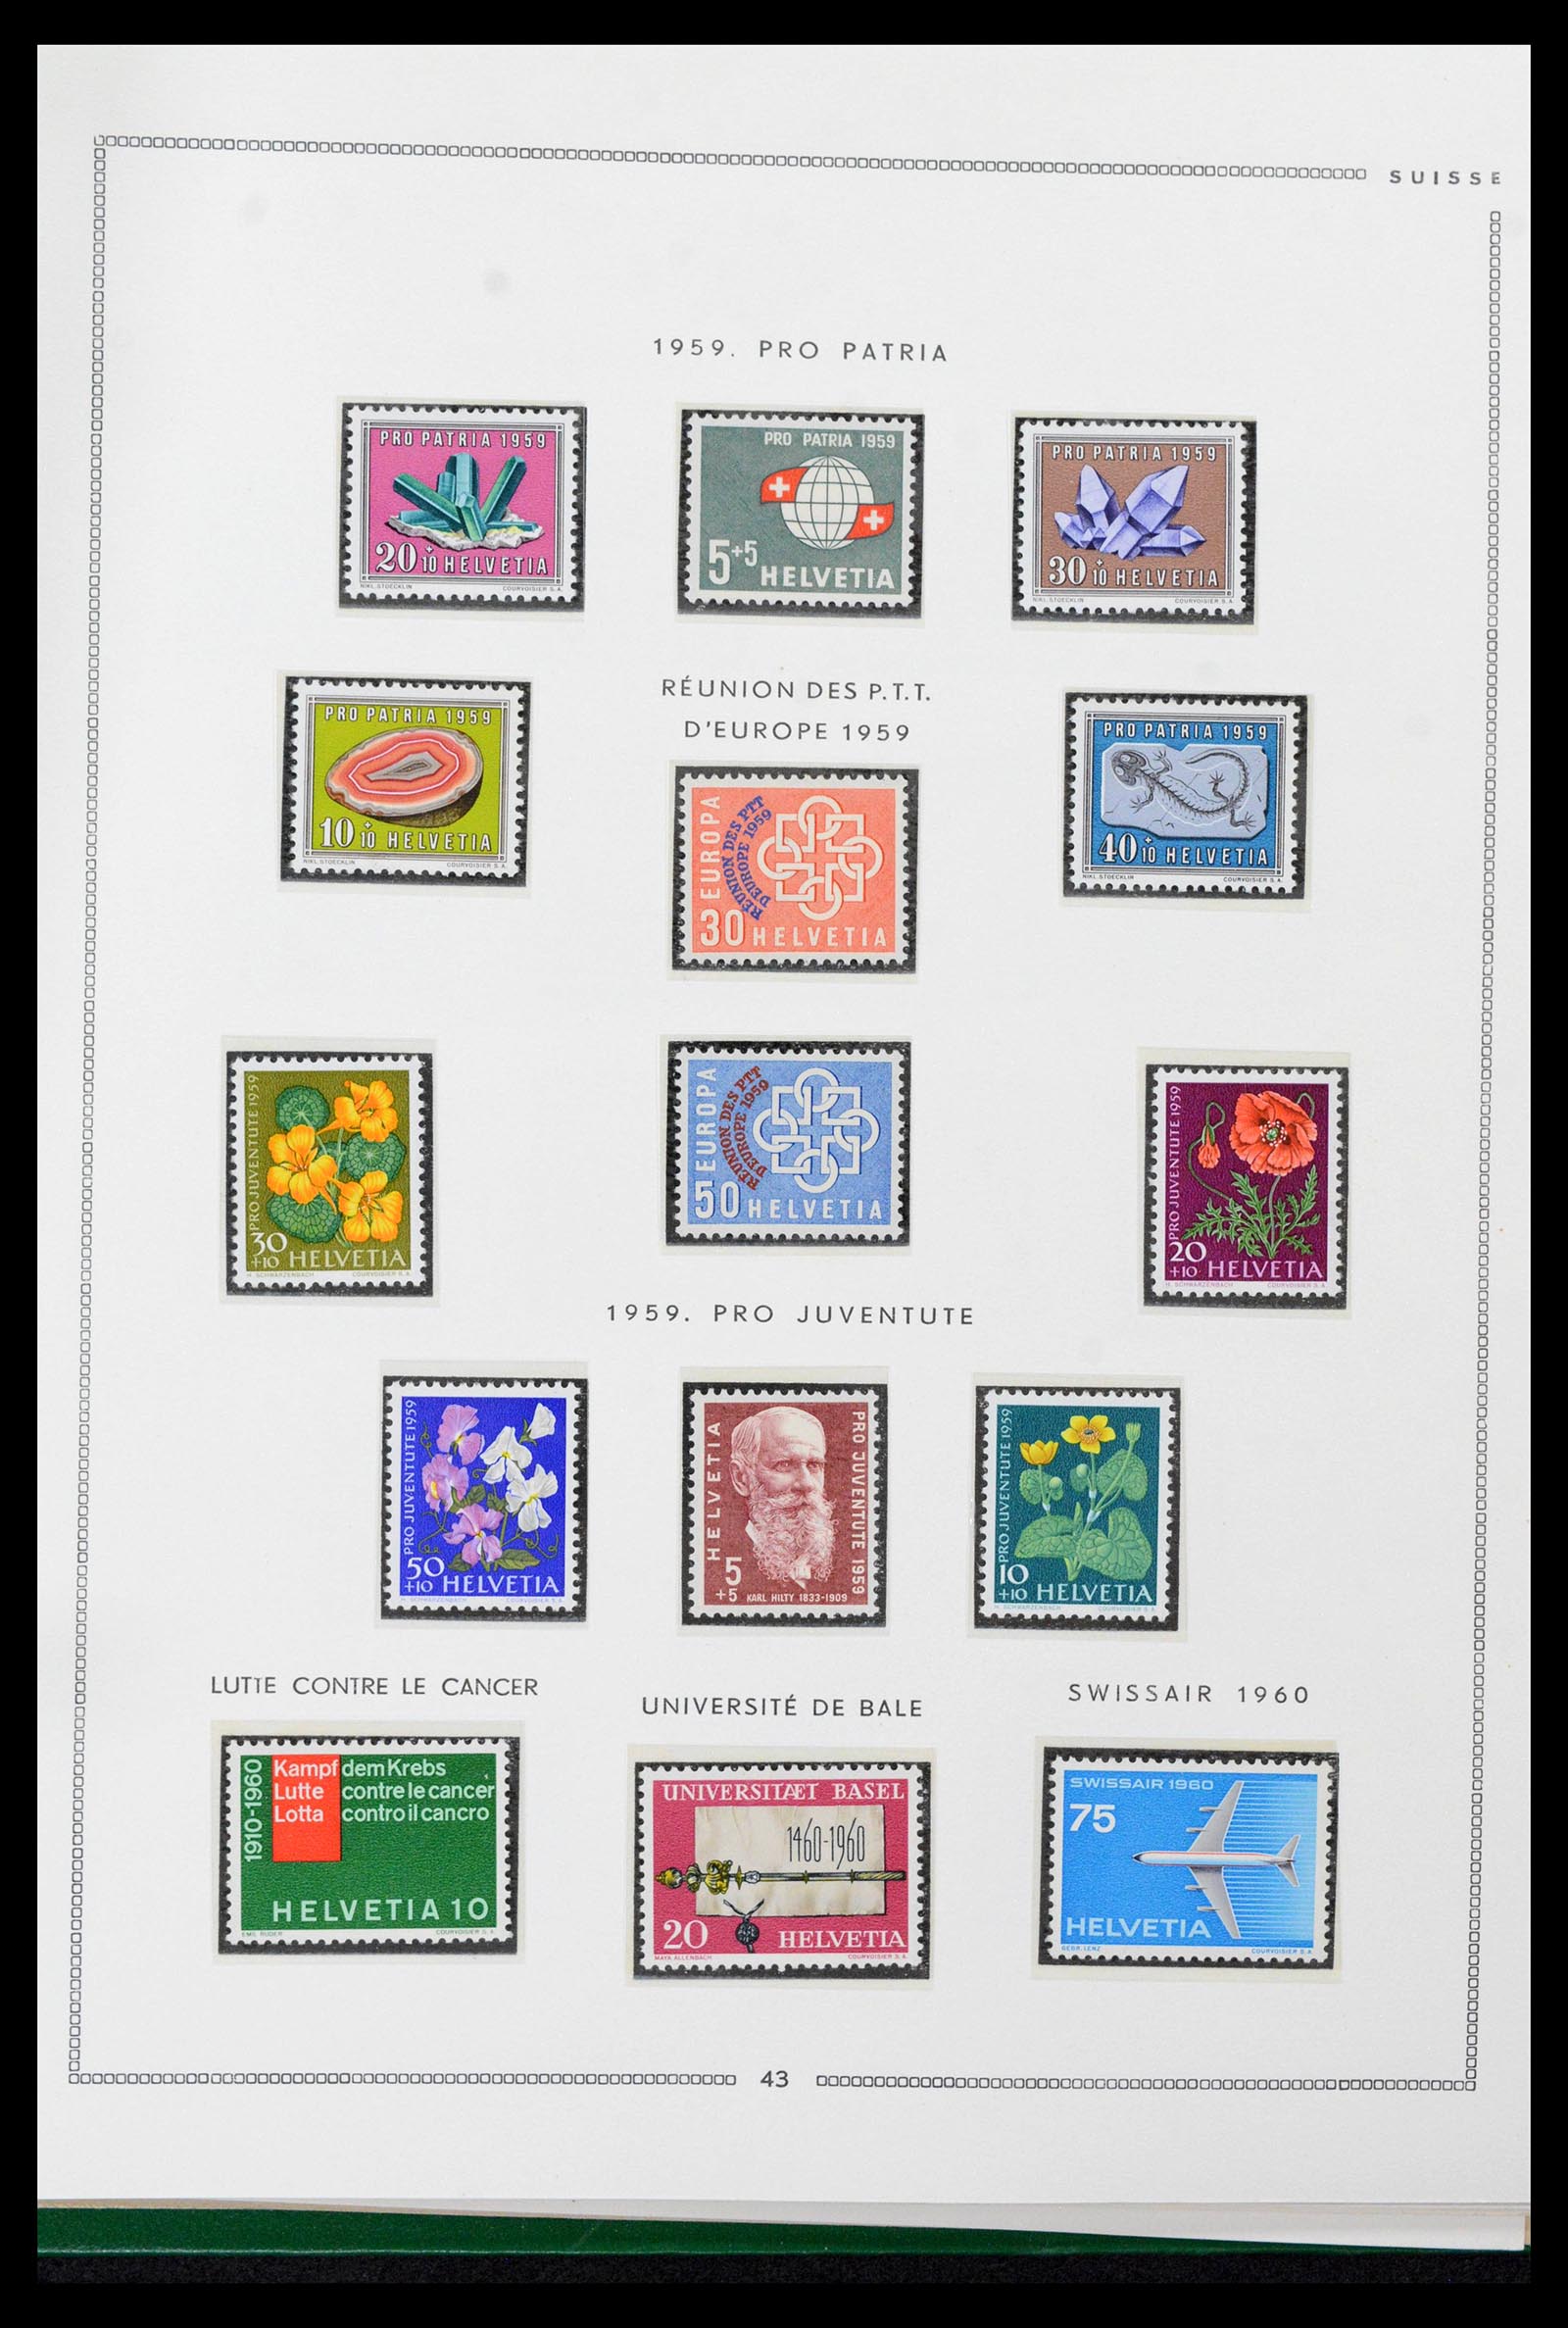 39096 0038 - Stamp collection 39096 Switzerland 1907-1963.